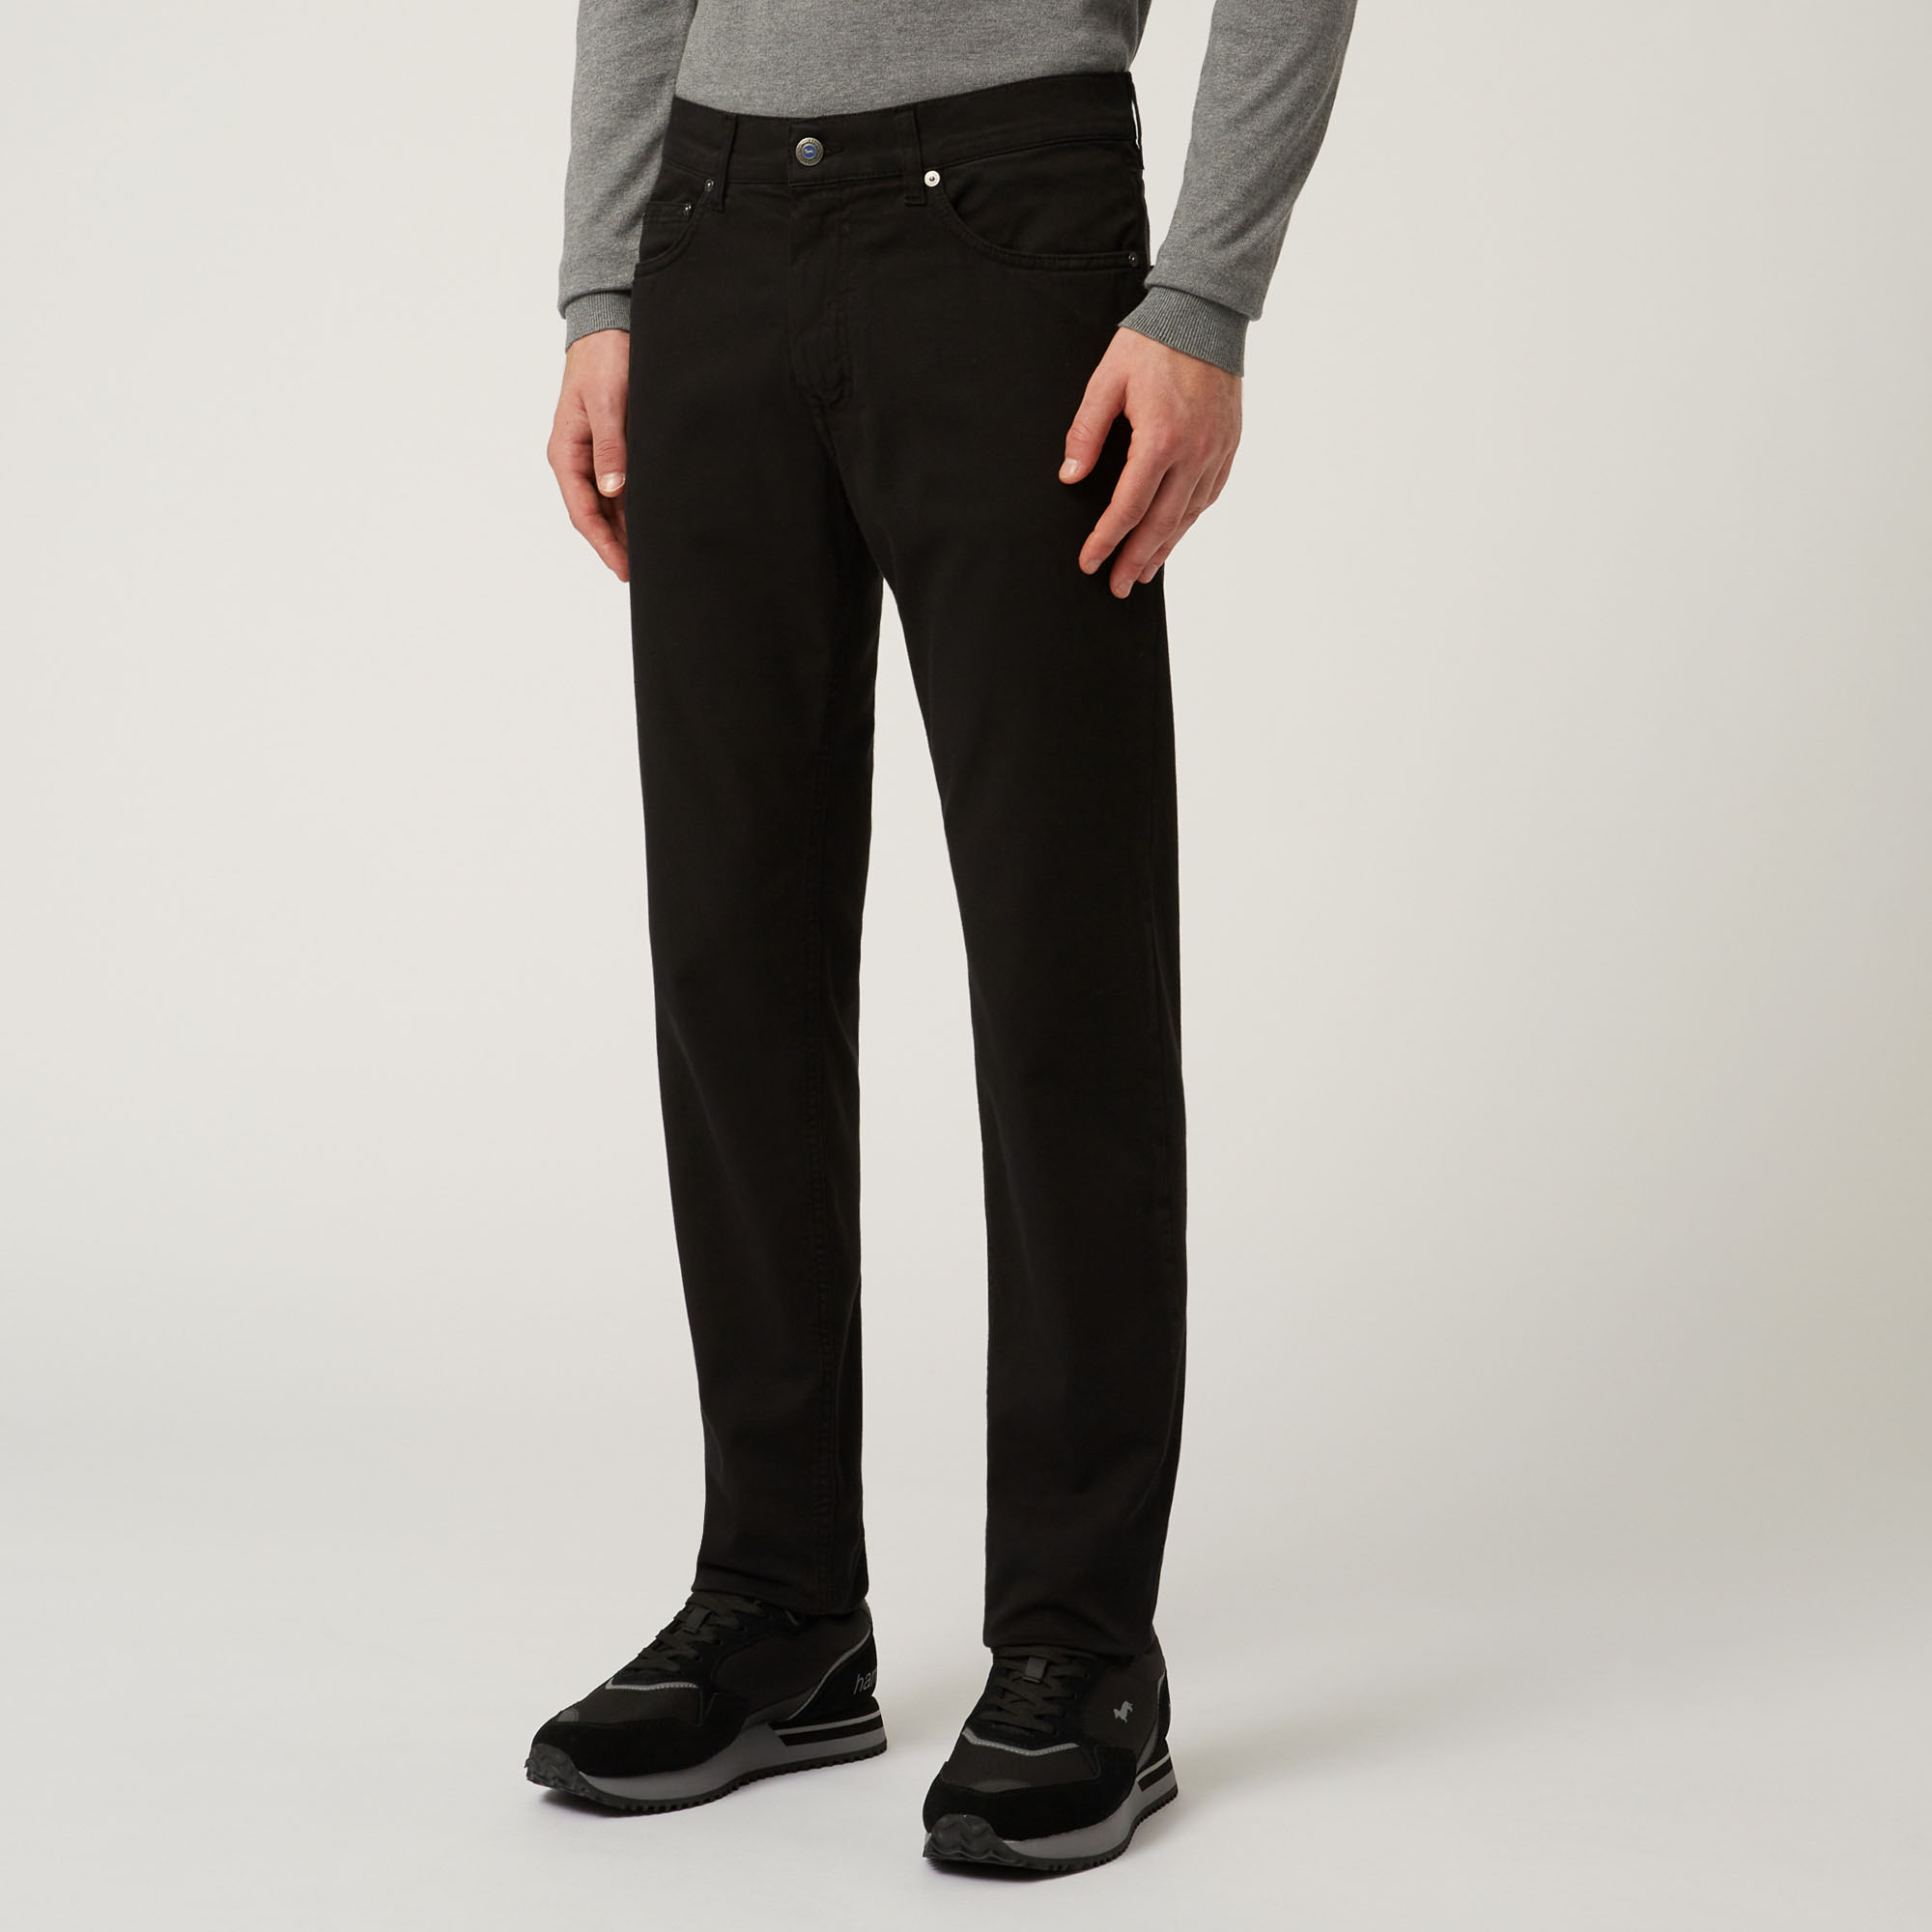 Pantalón Essentials de algodón liso, Negro, large